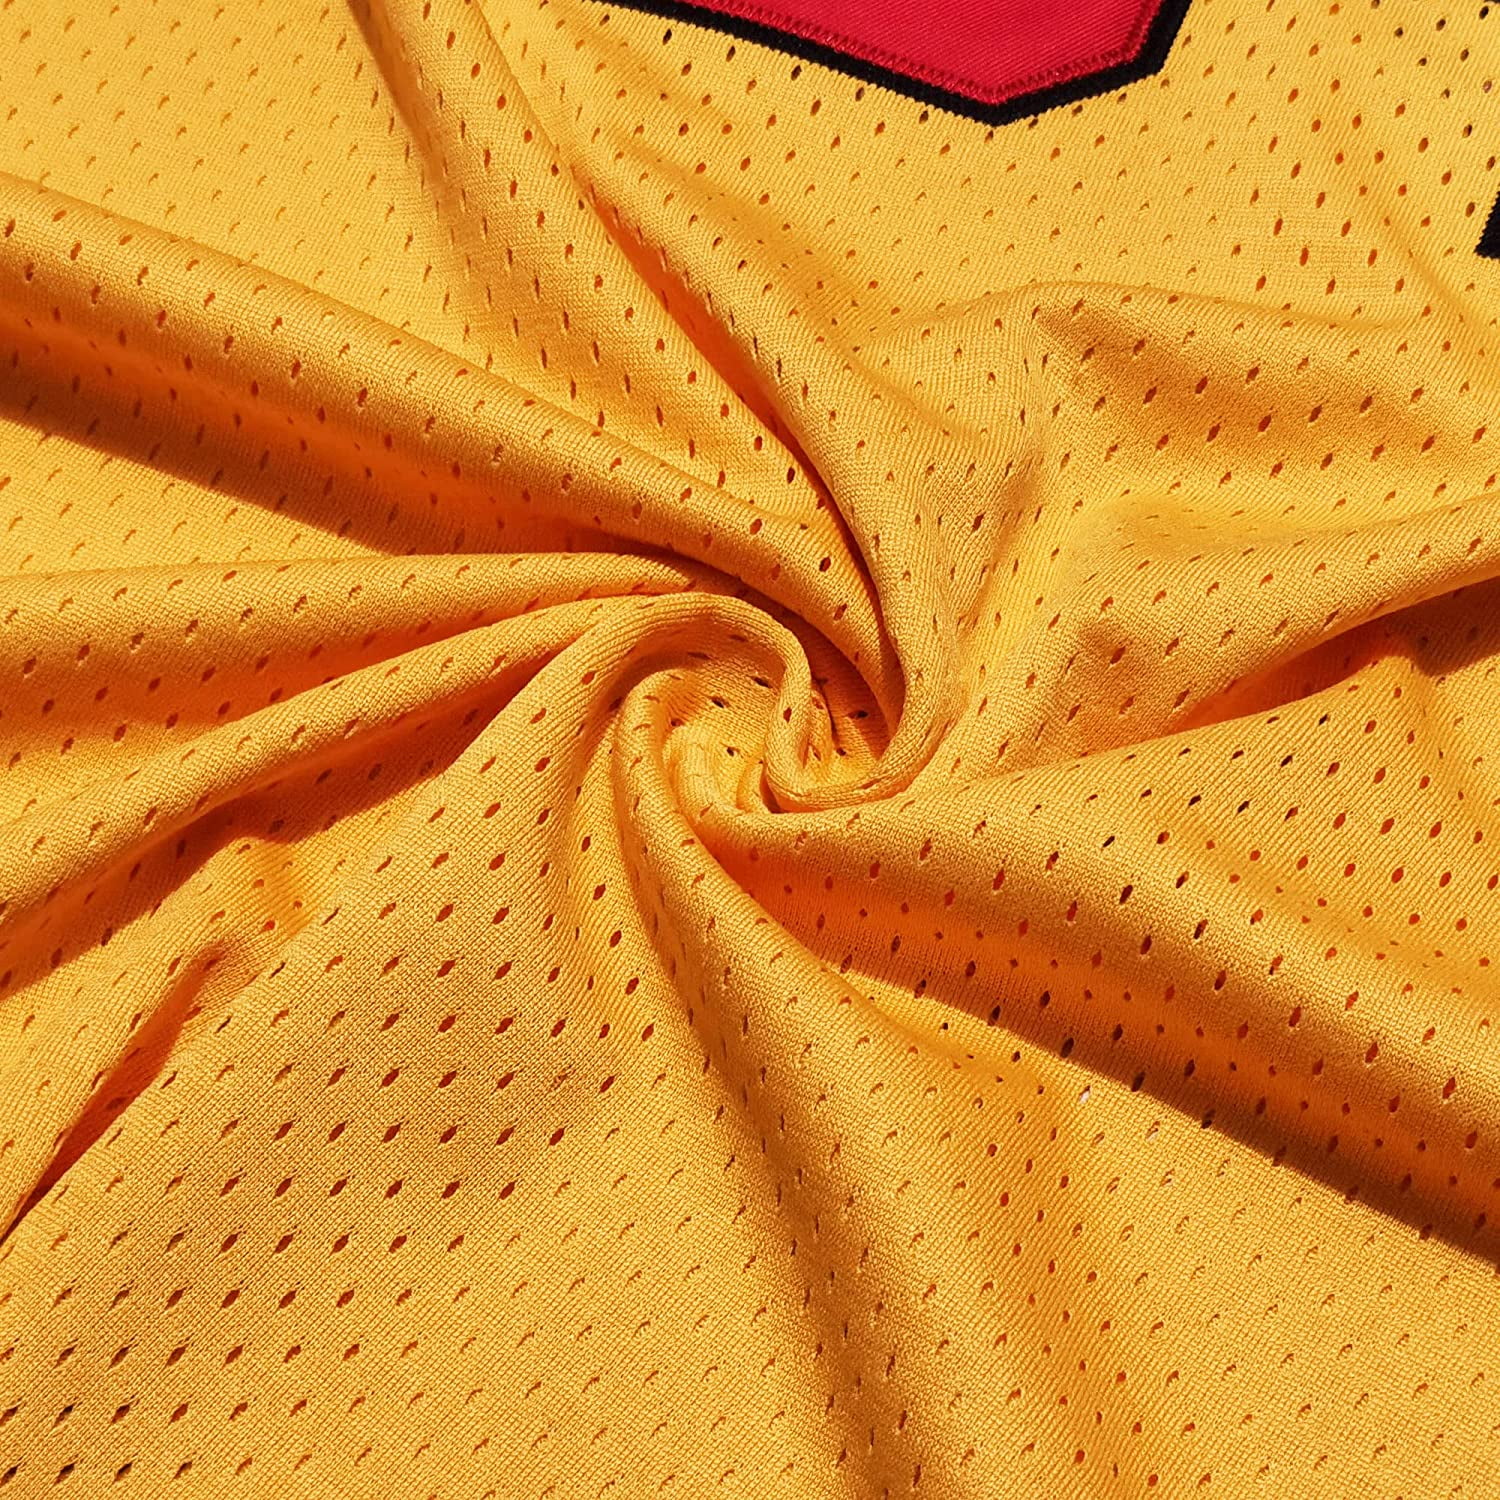 Buy 80's Len Bias 34 Basketball Jersey Yellow&whitetop Online in India 